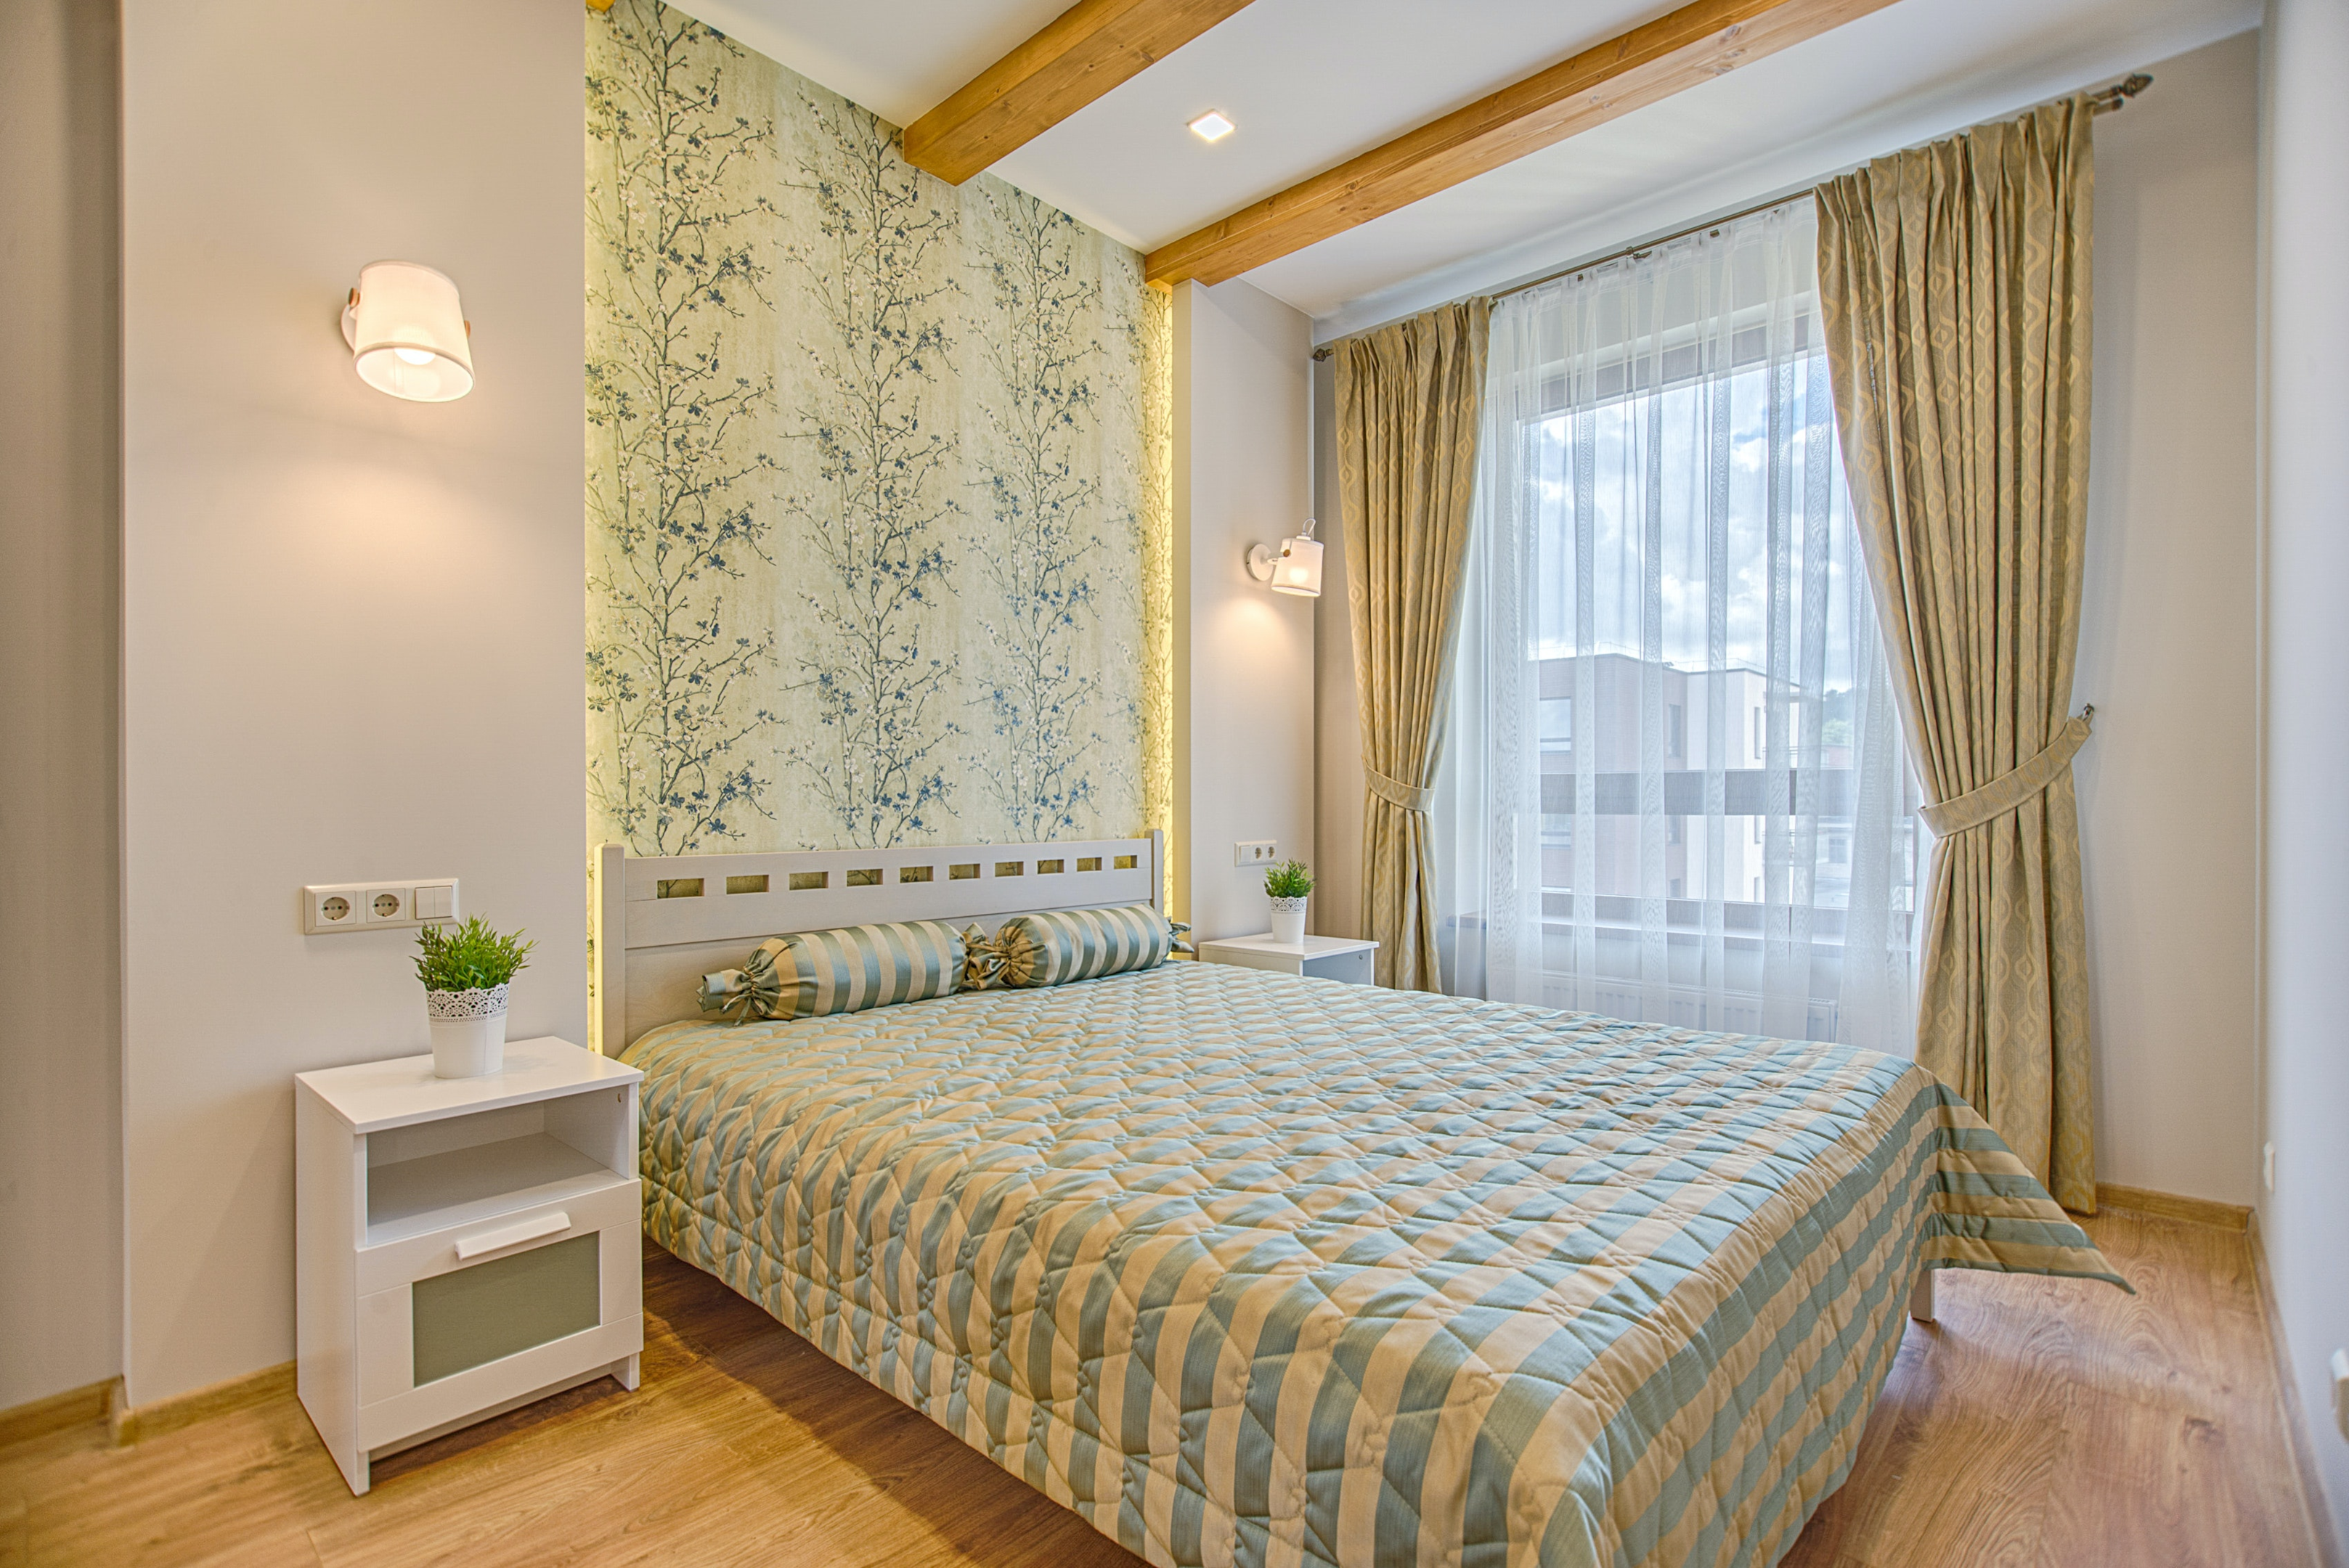 Basic Principles of Bedroom Layout Design